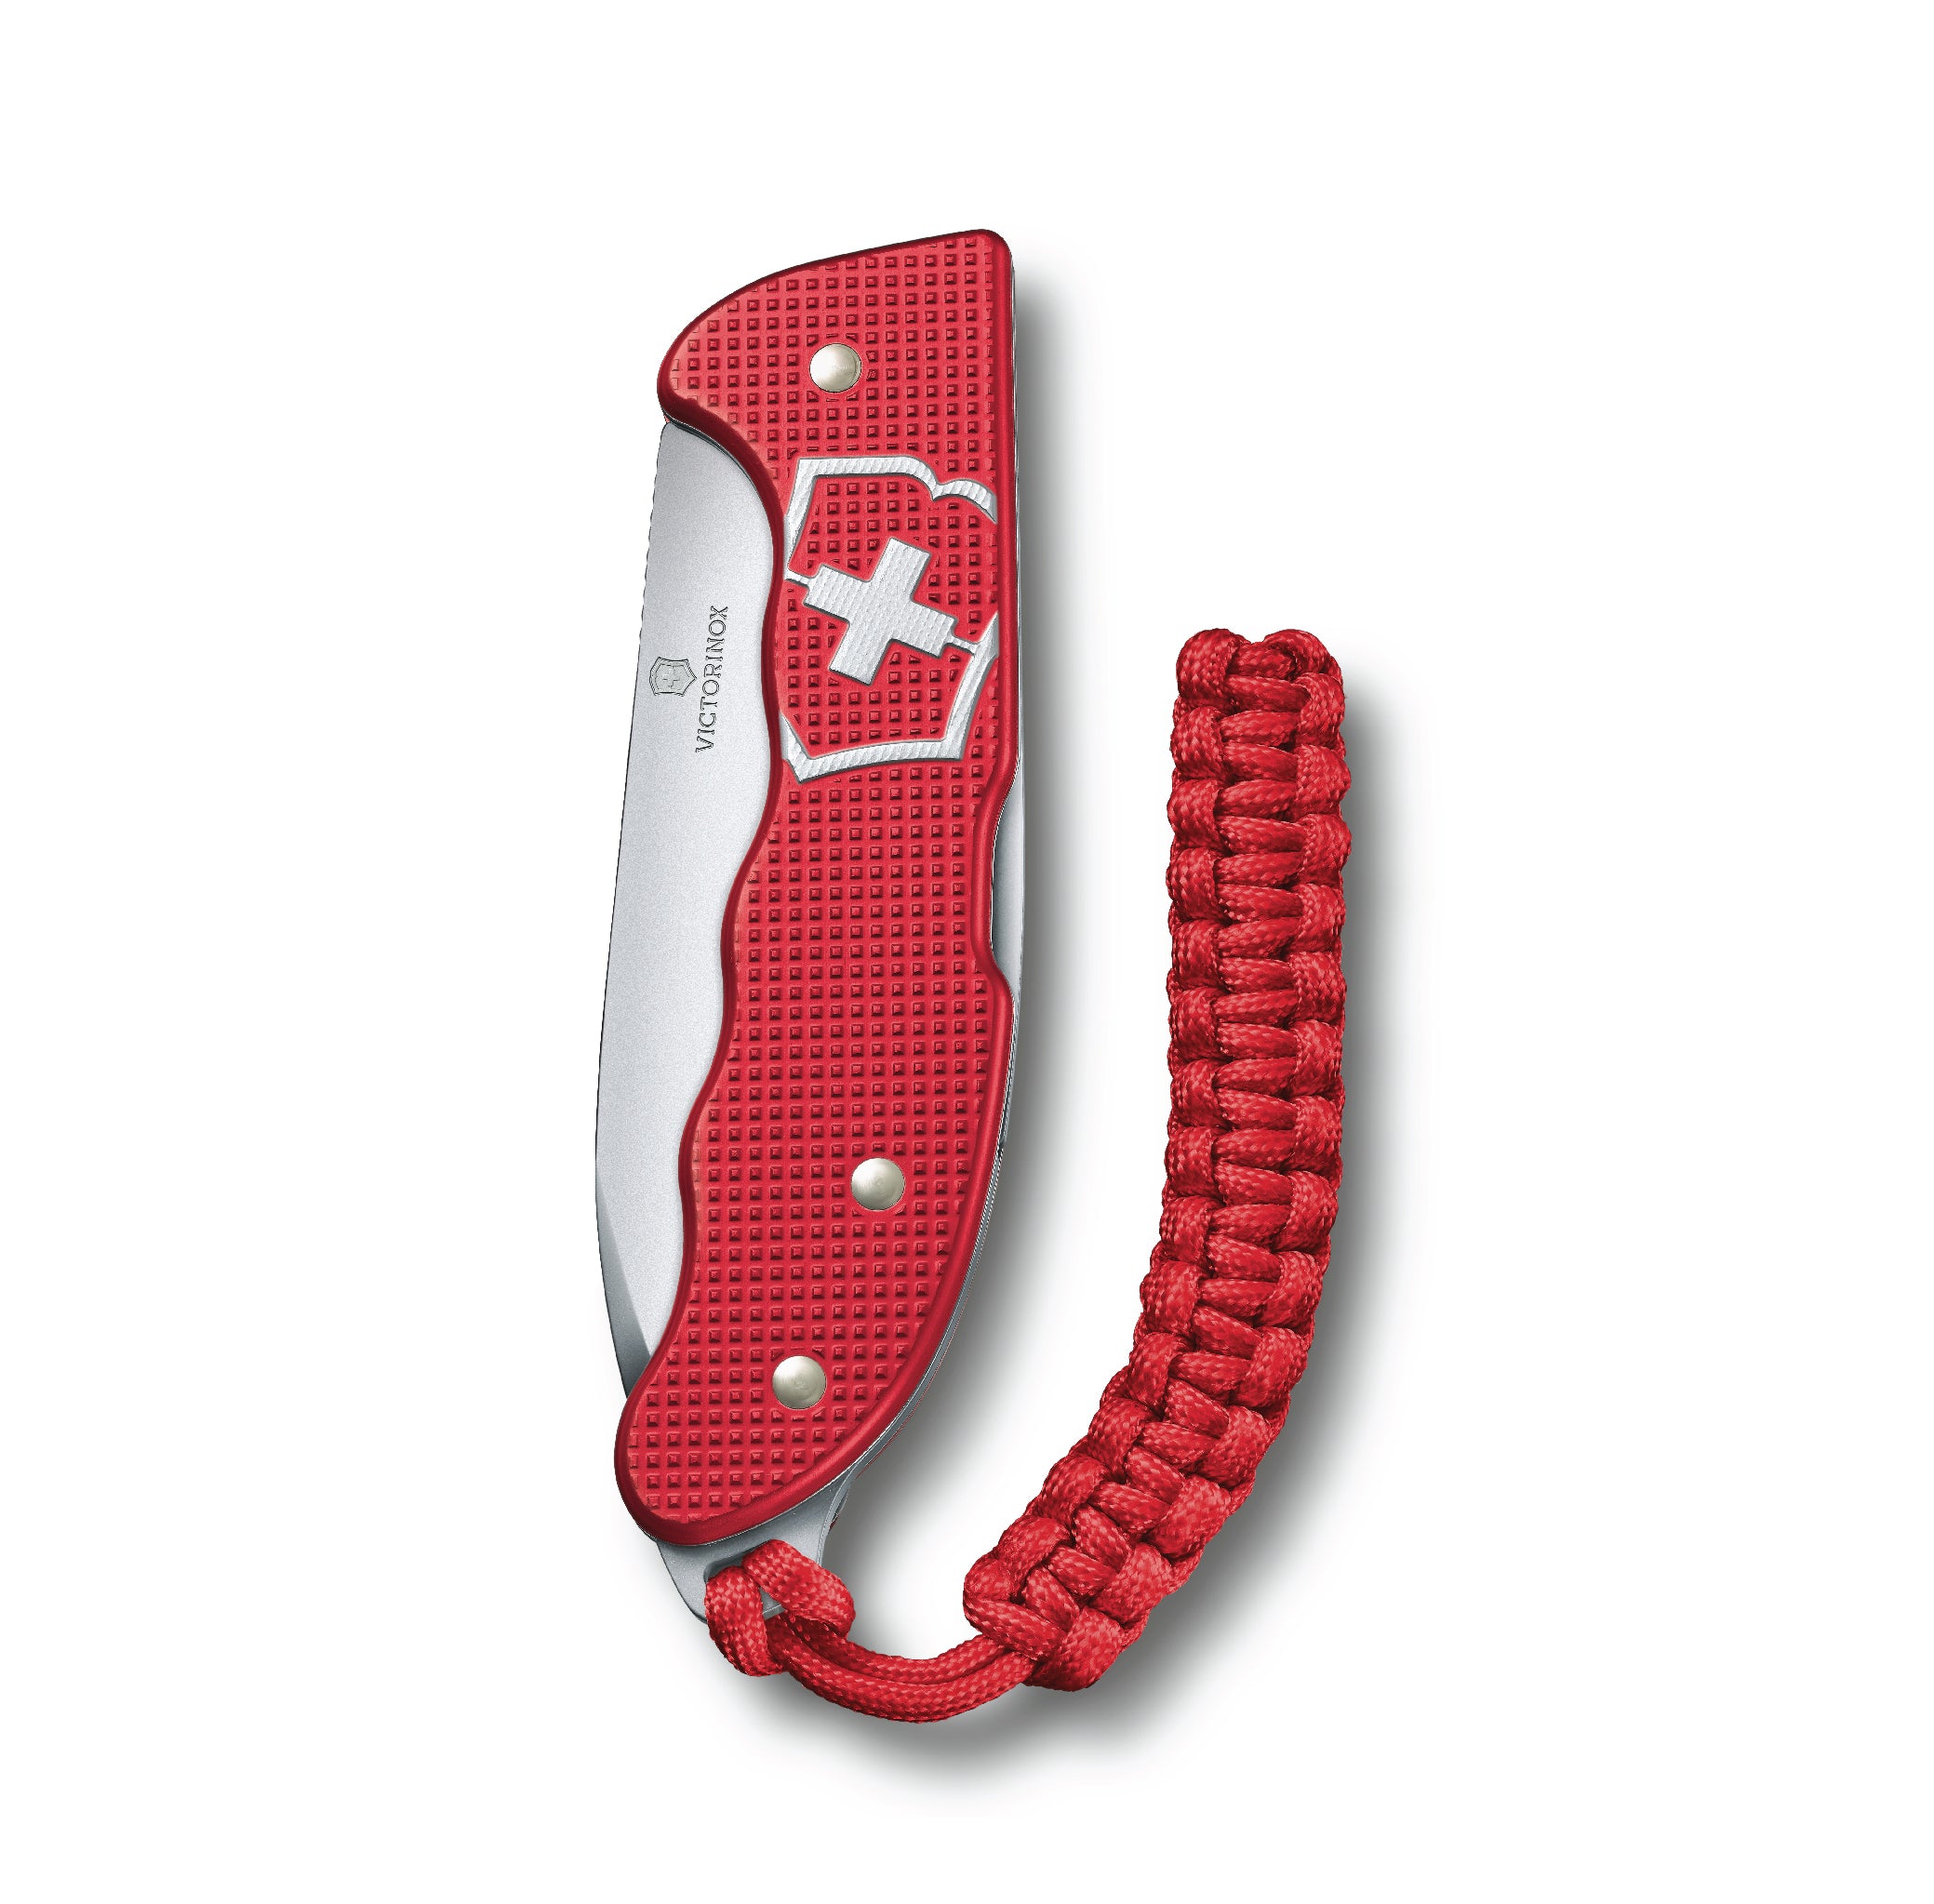 Victorinox Hunter Pro Alox Swiss Army Knife